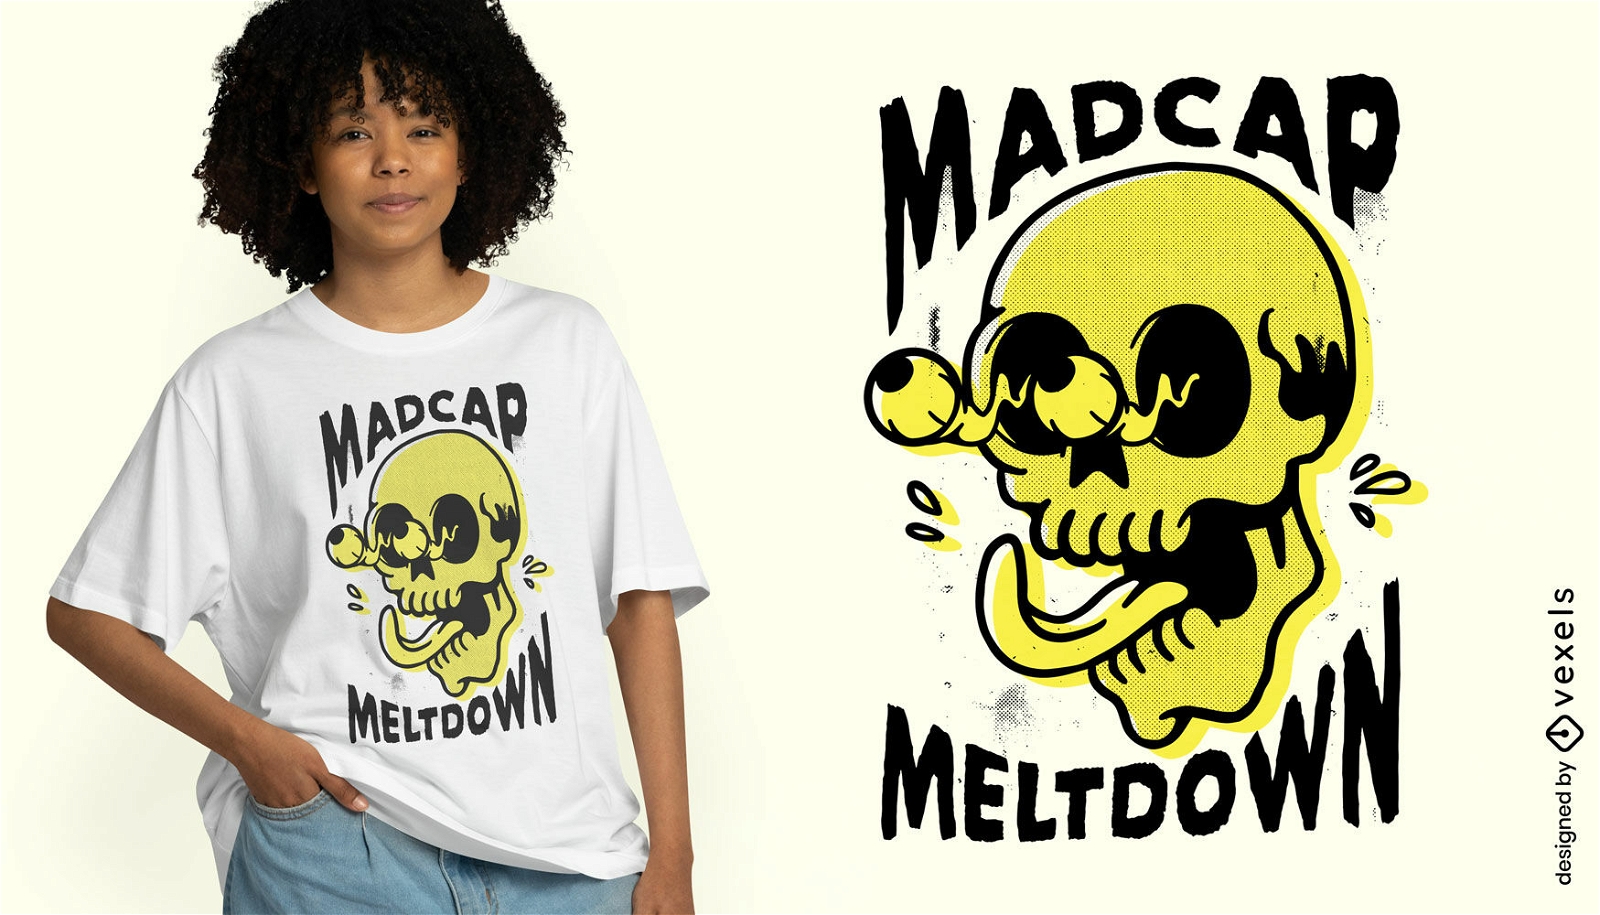 Madcap meldown skull t-shirt design